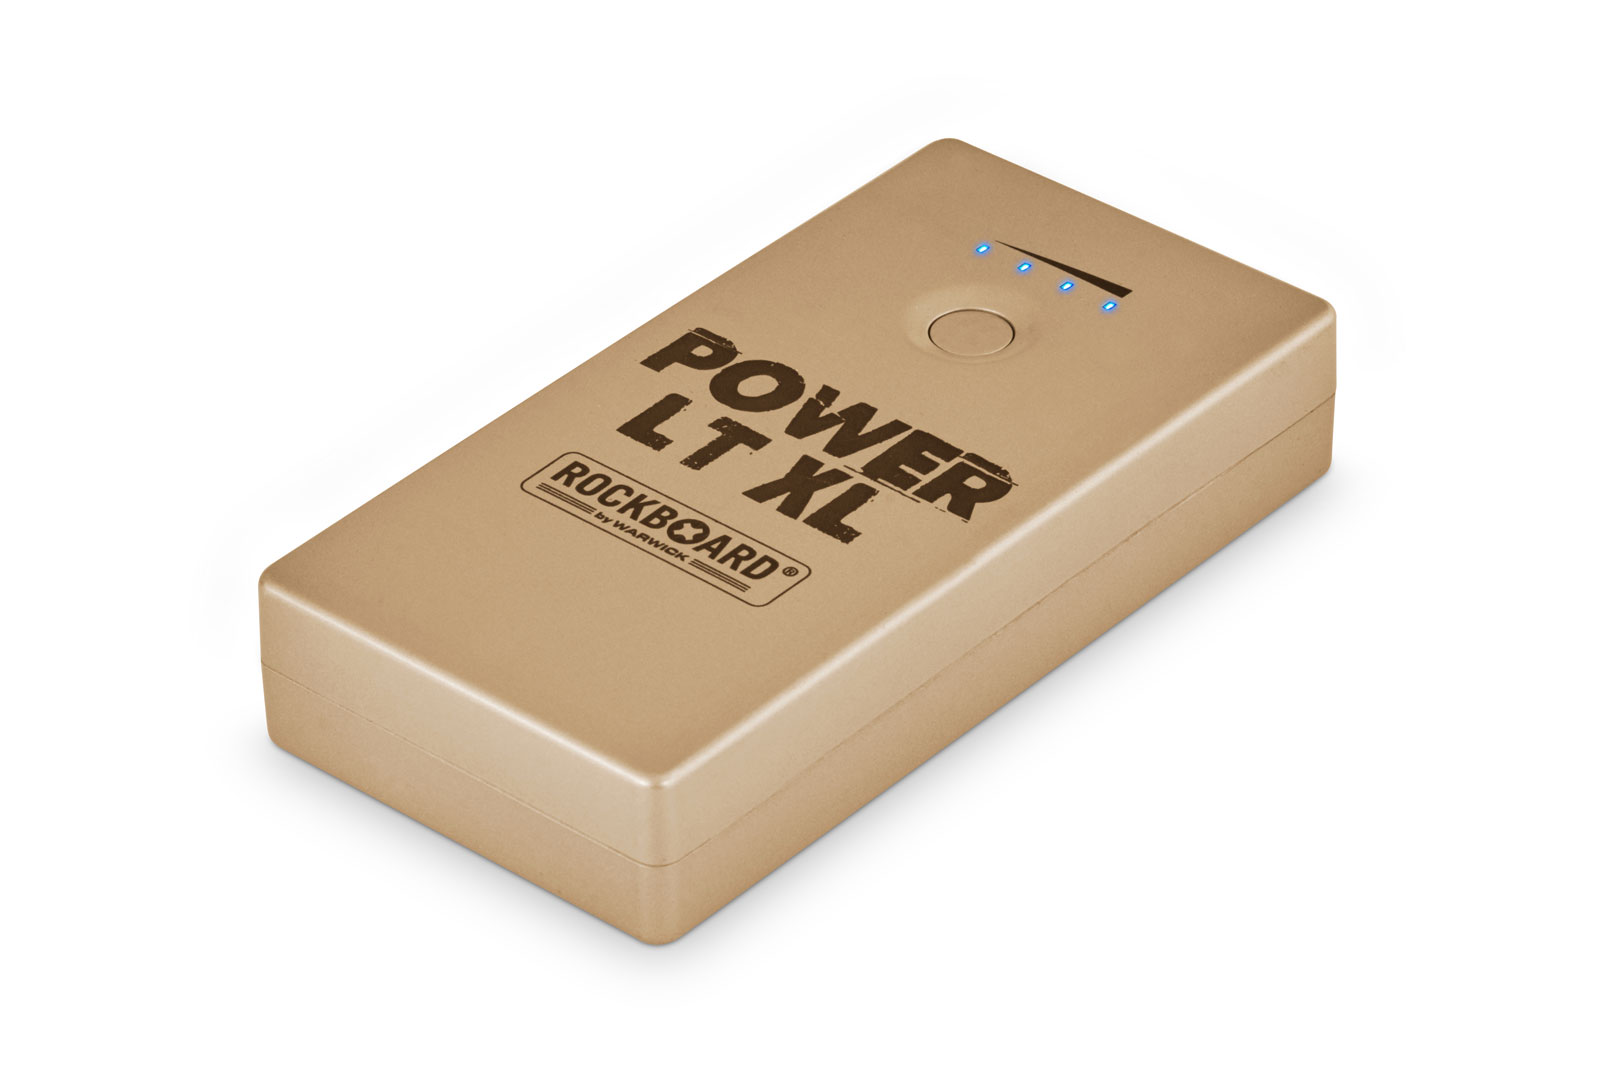 Rockboard Power Lt Xl Gold - Power supply - Variation 1